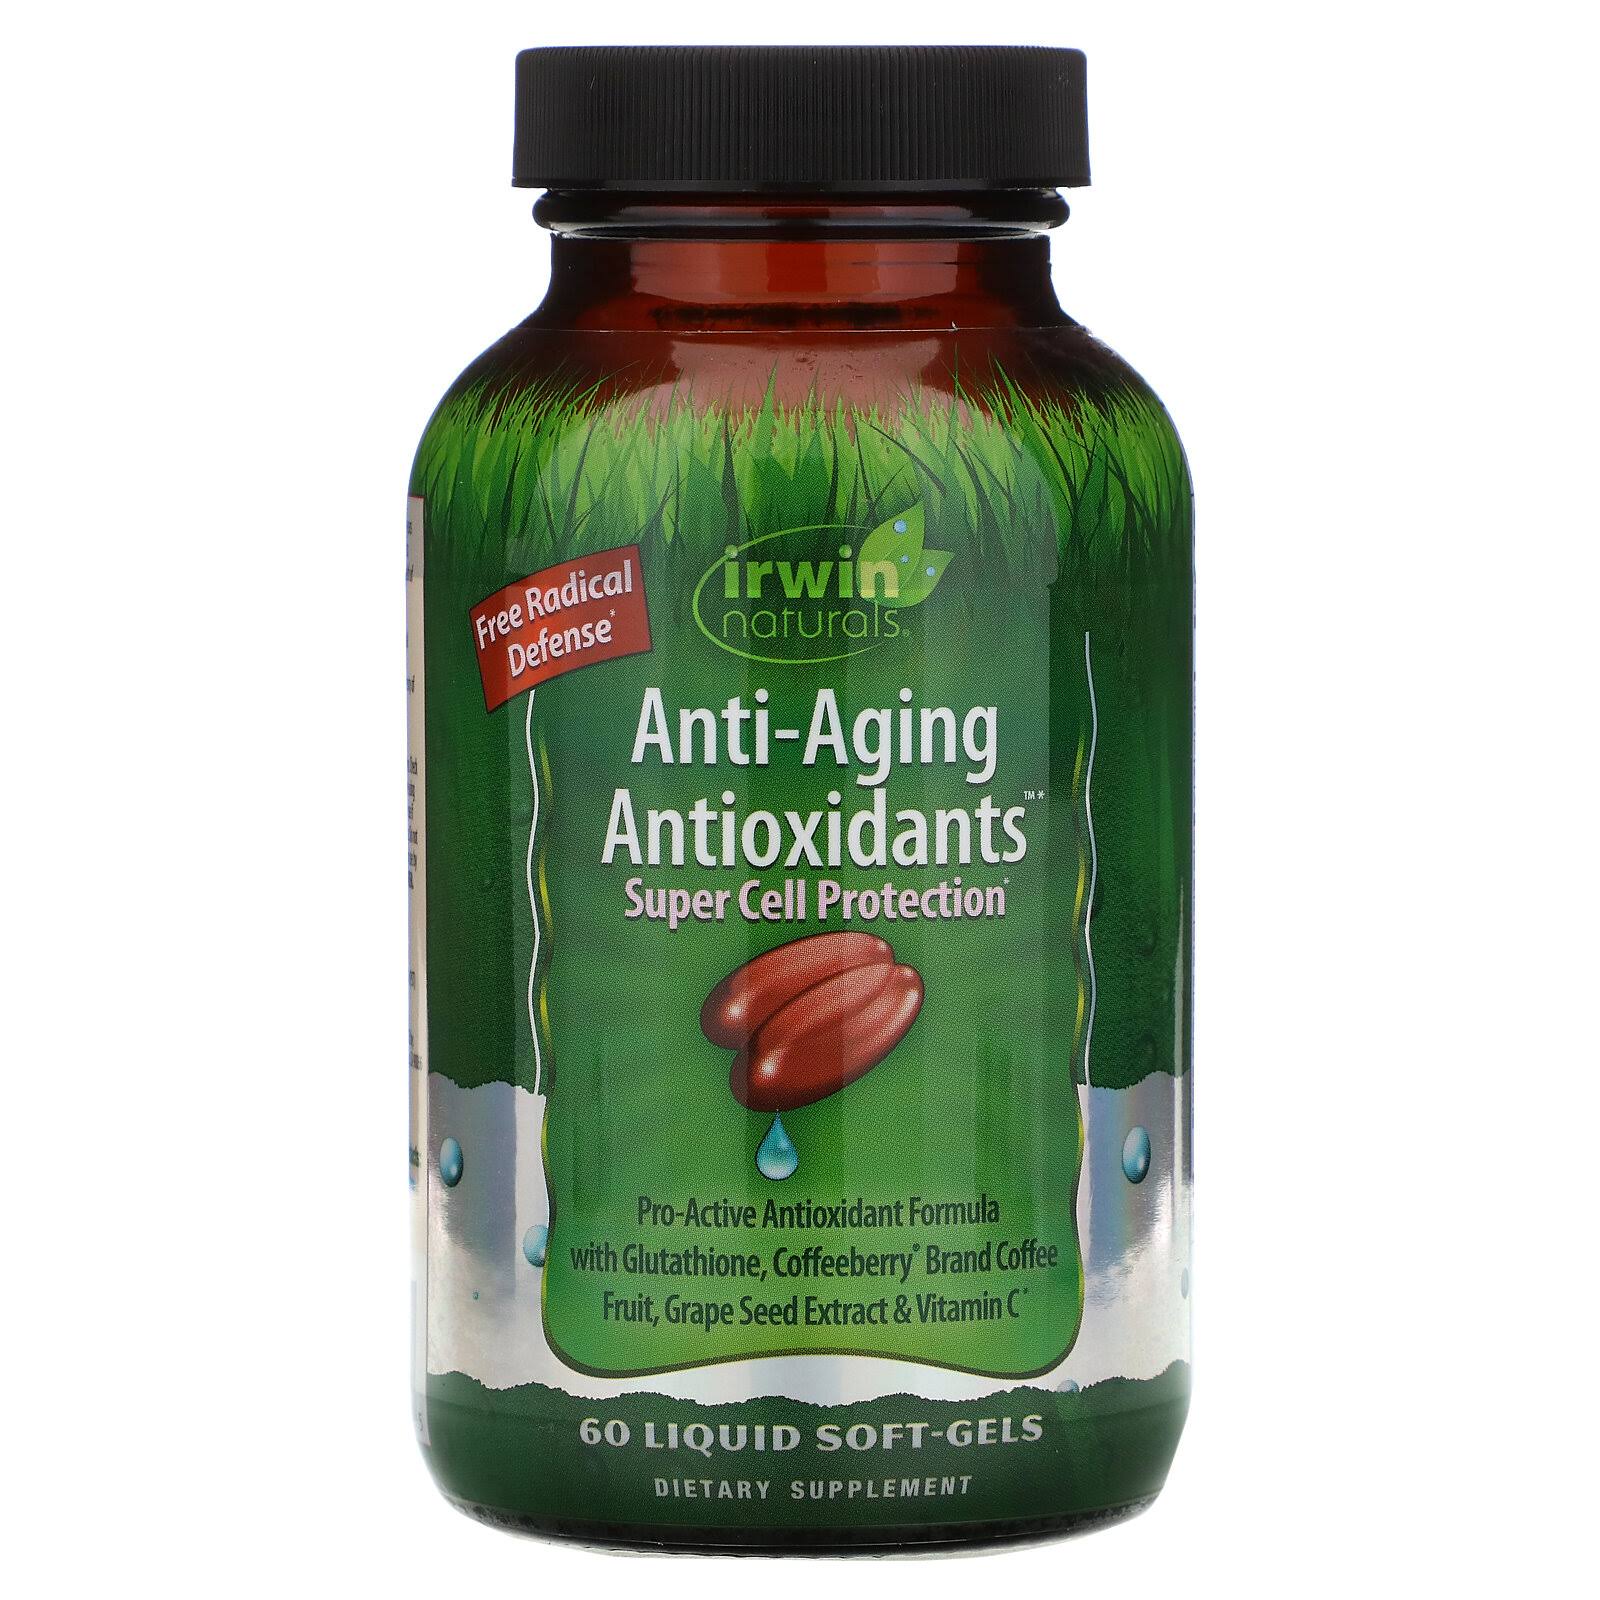 Irwin Naturals Anti-Aging Antioxidants Supplement - 60ct